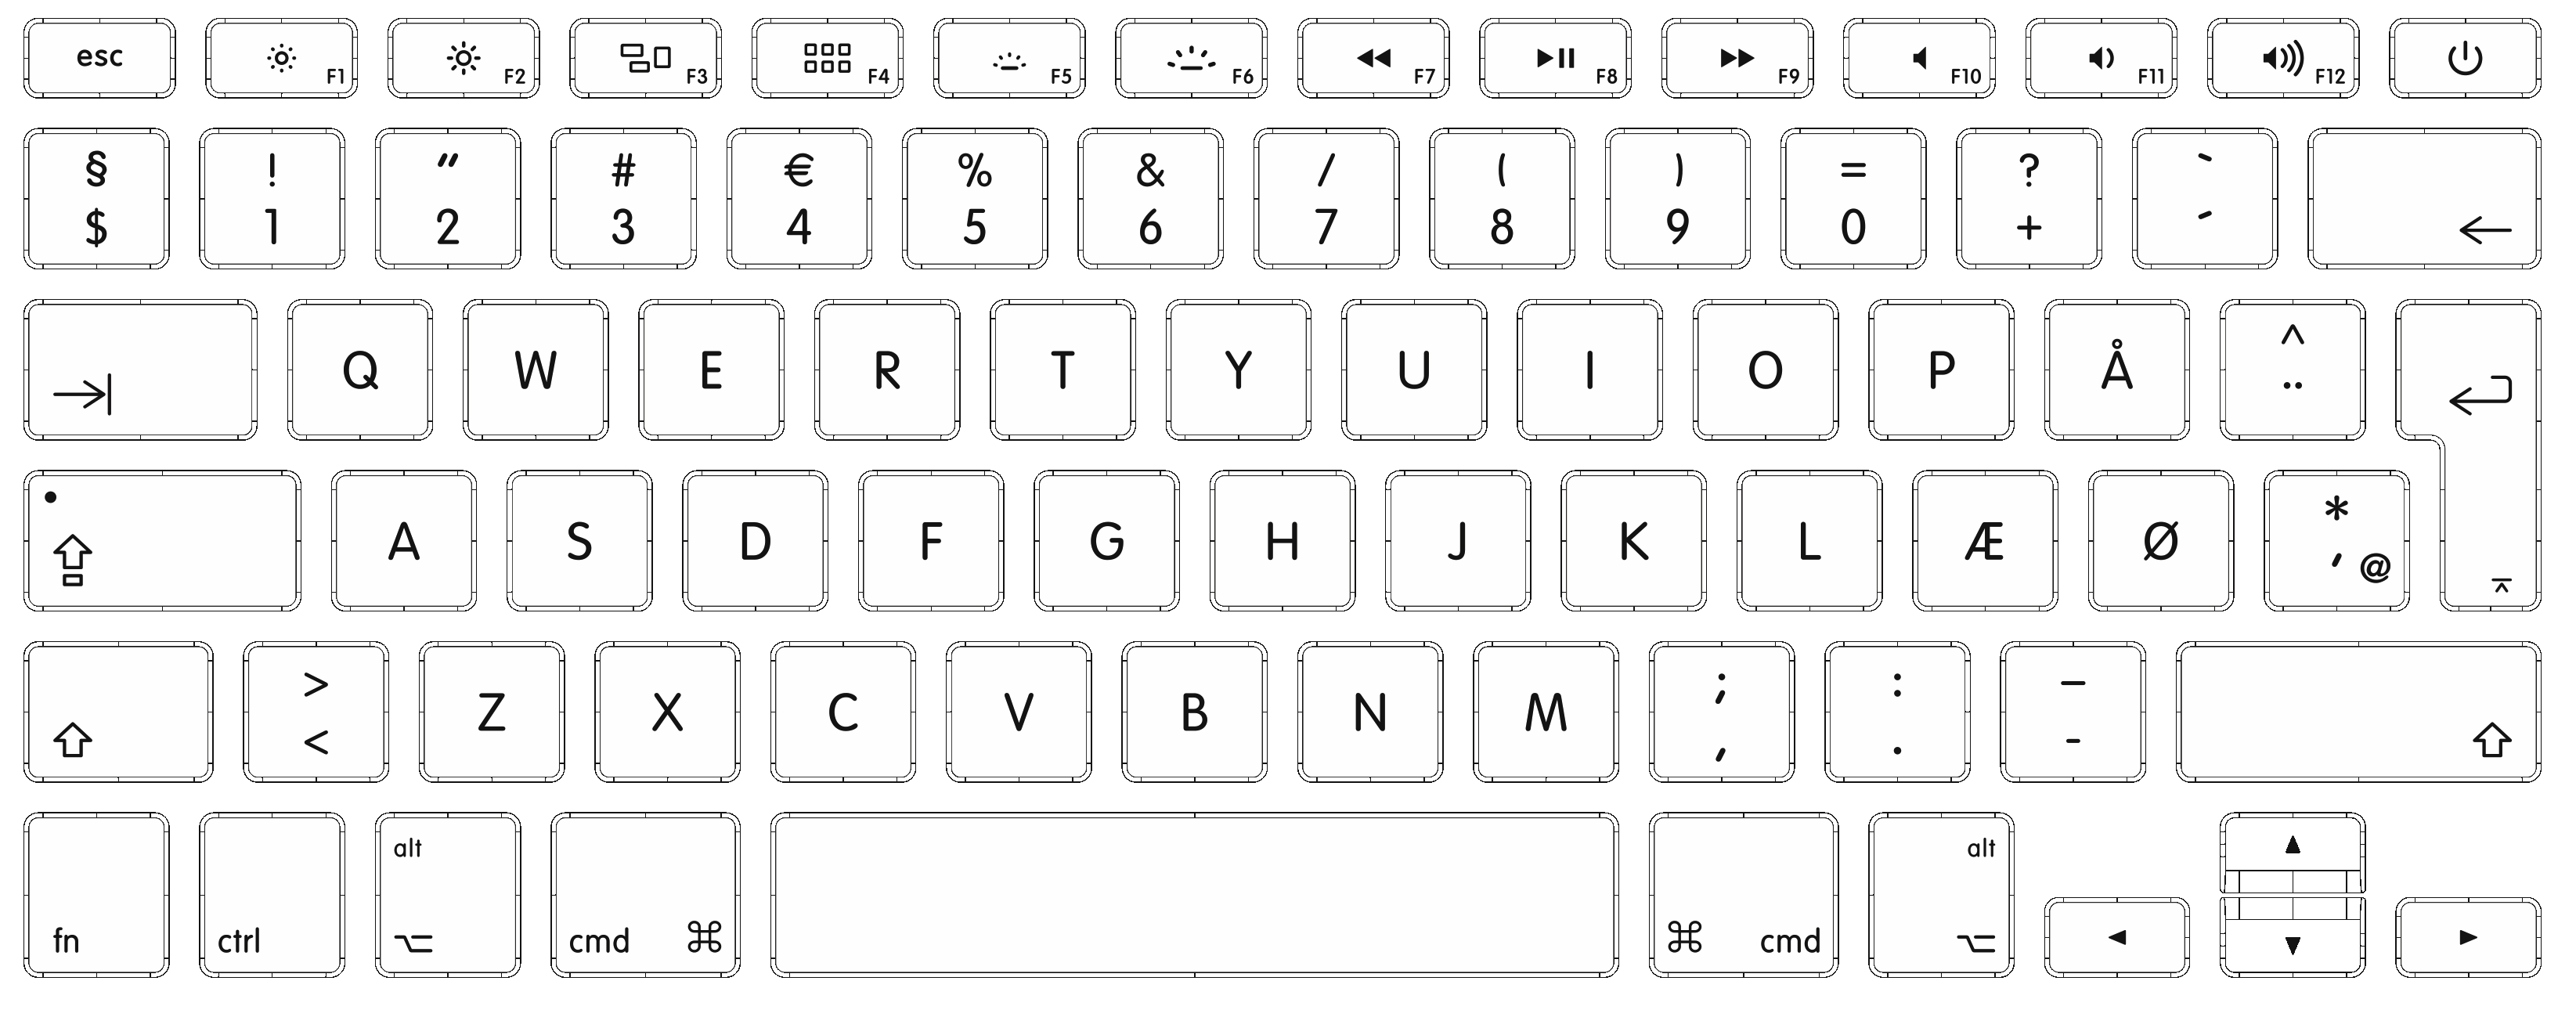 alt on macbook keyboard